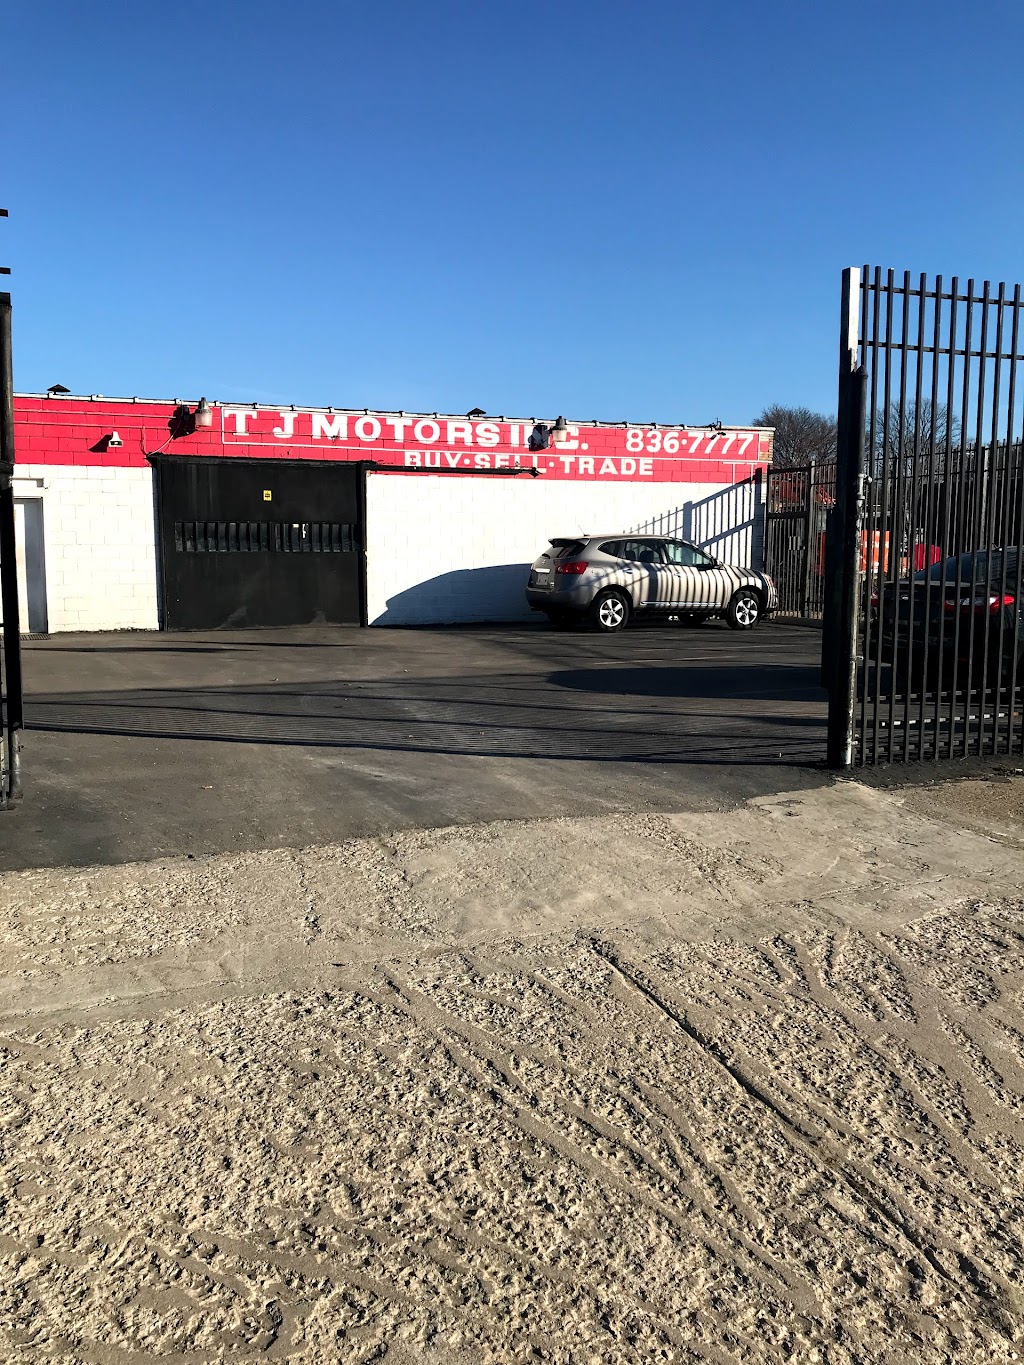 T J Motors Inc | 15230 Joy Rd, Detroit, MI 48228 | Phone: (313) 836-7777